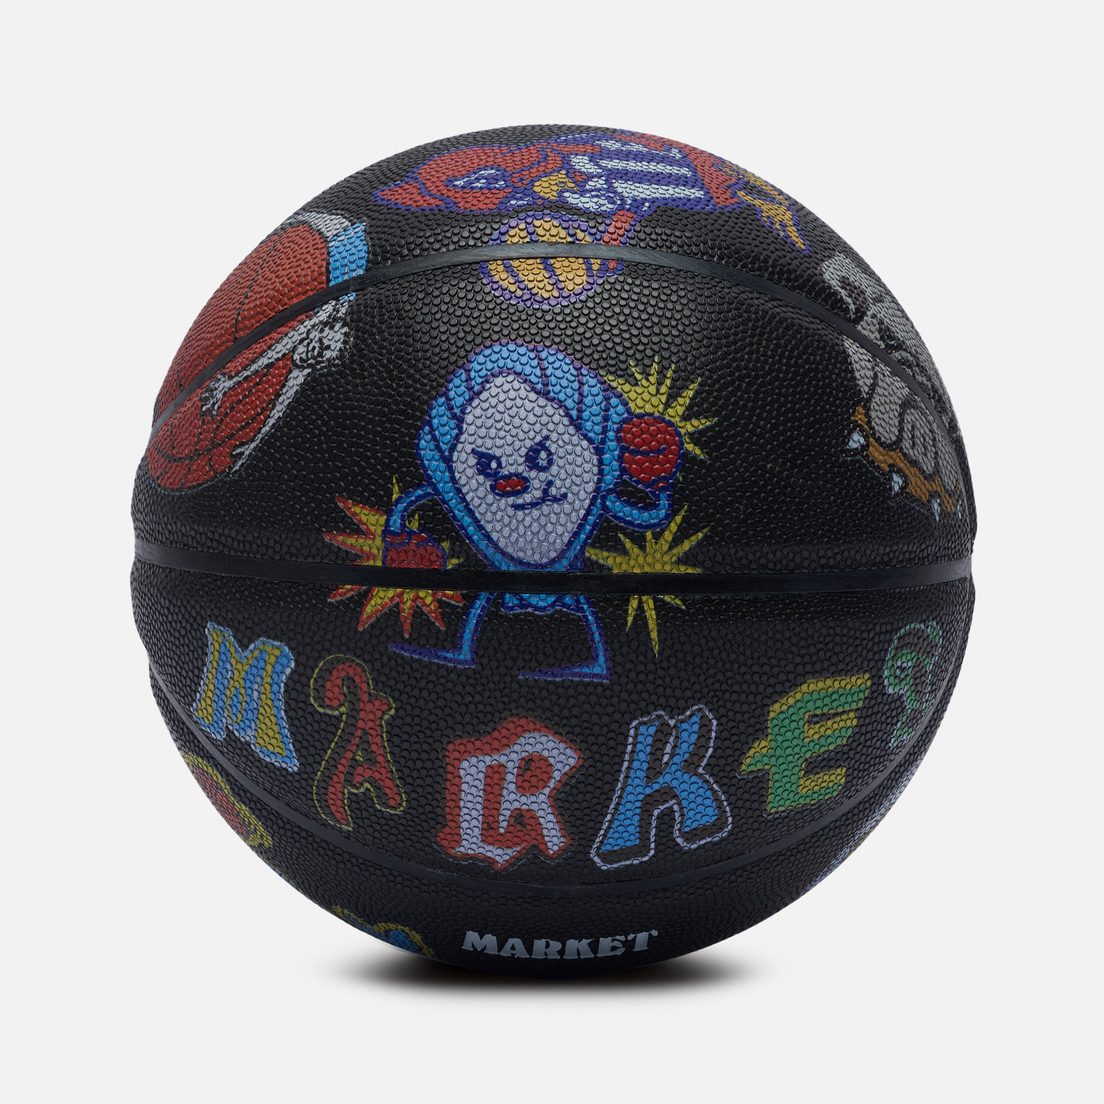 MARKET Баскетбольный мяч Varsity Overload